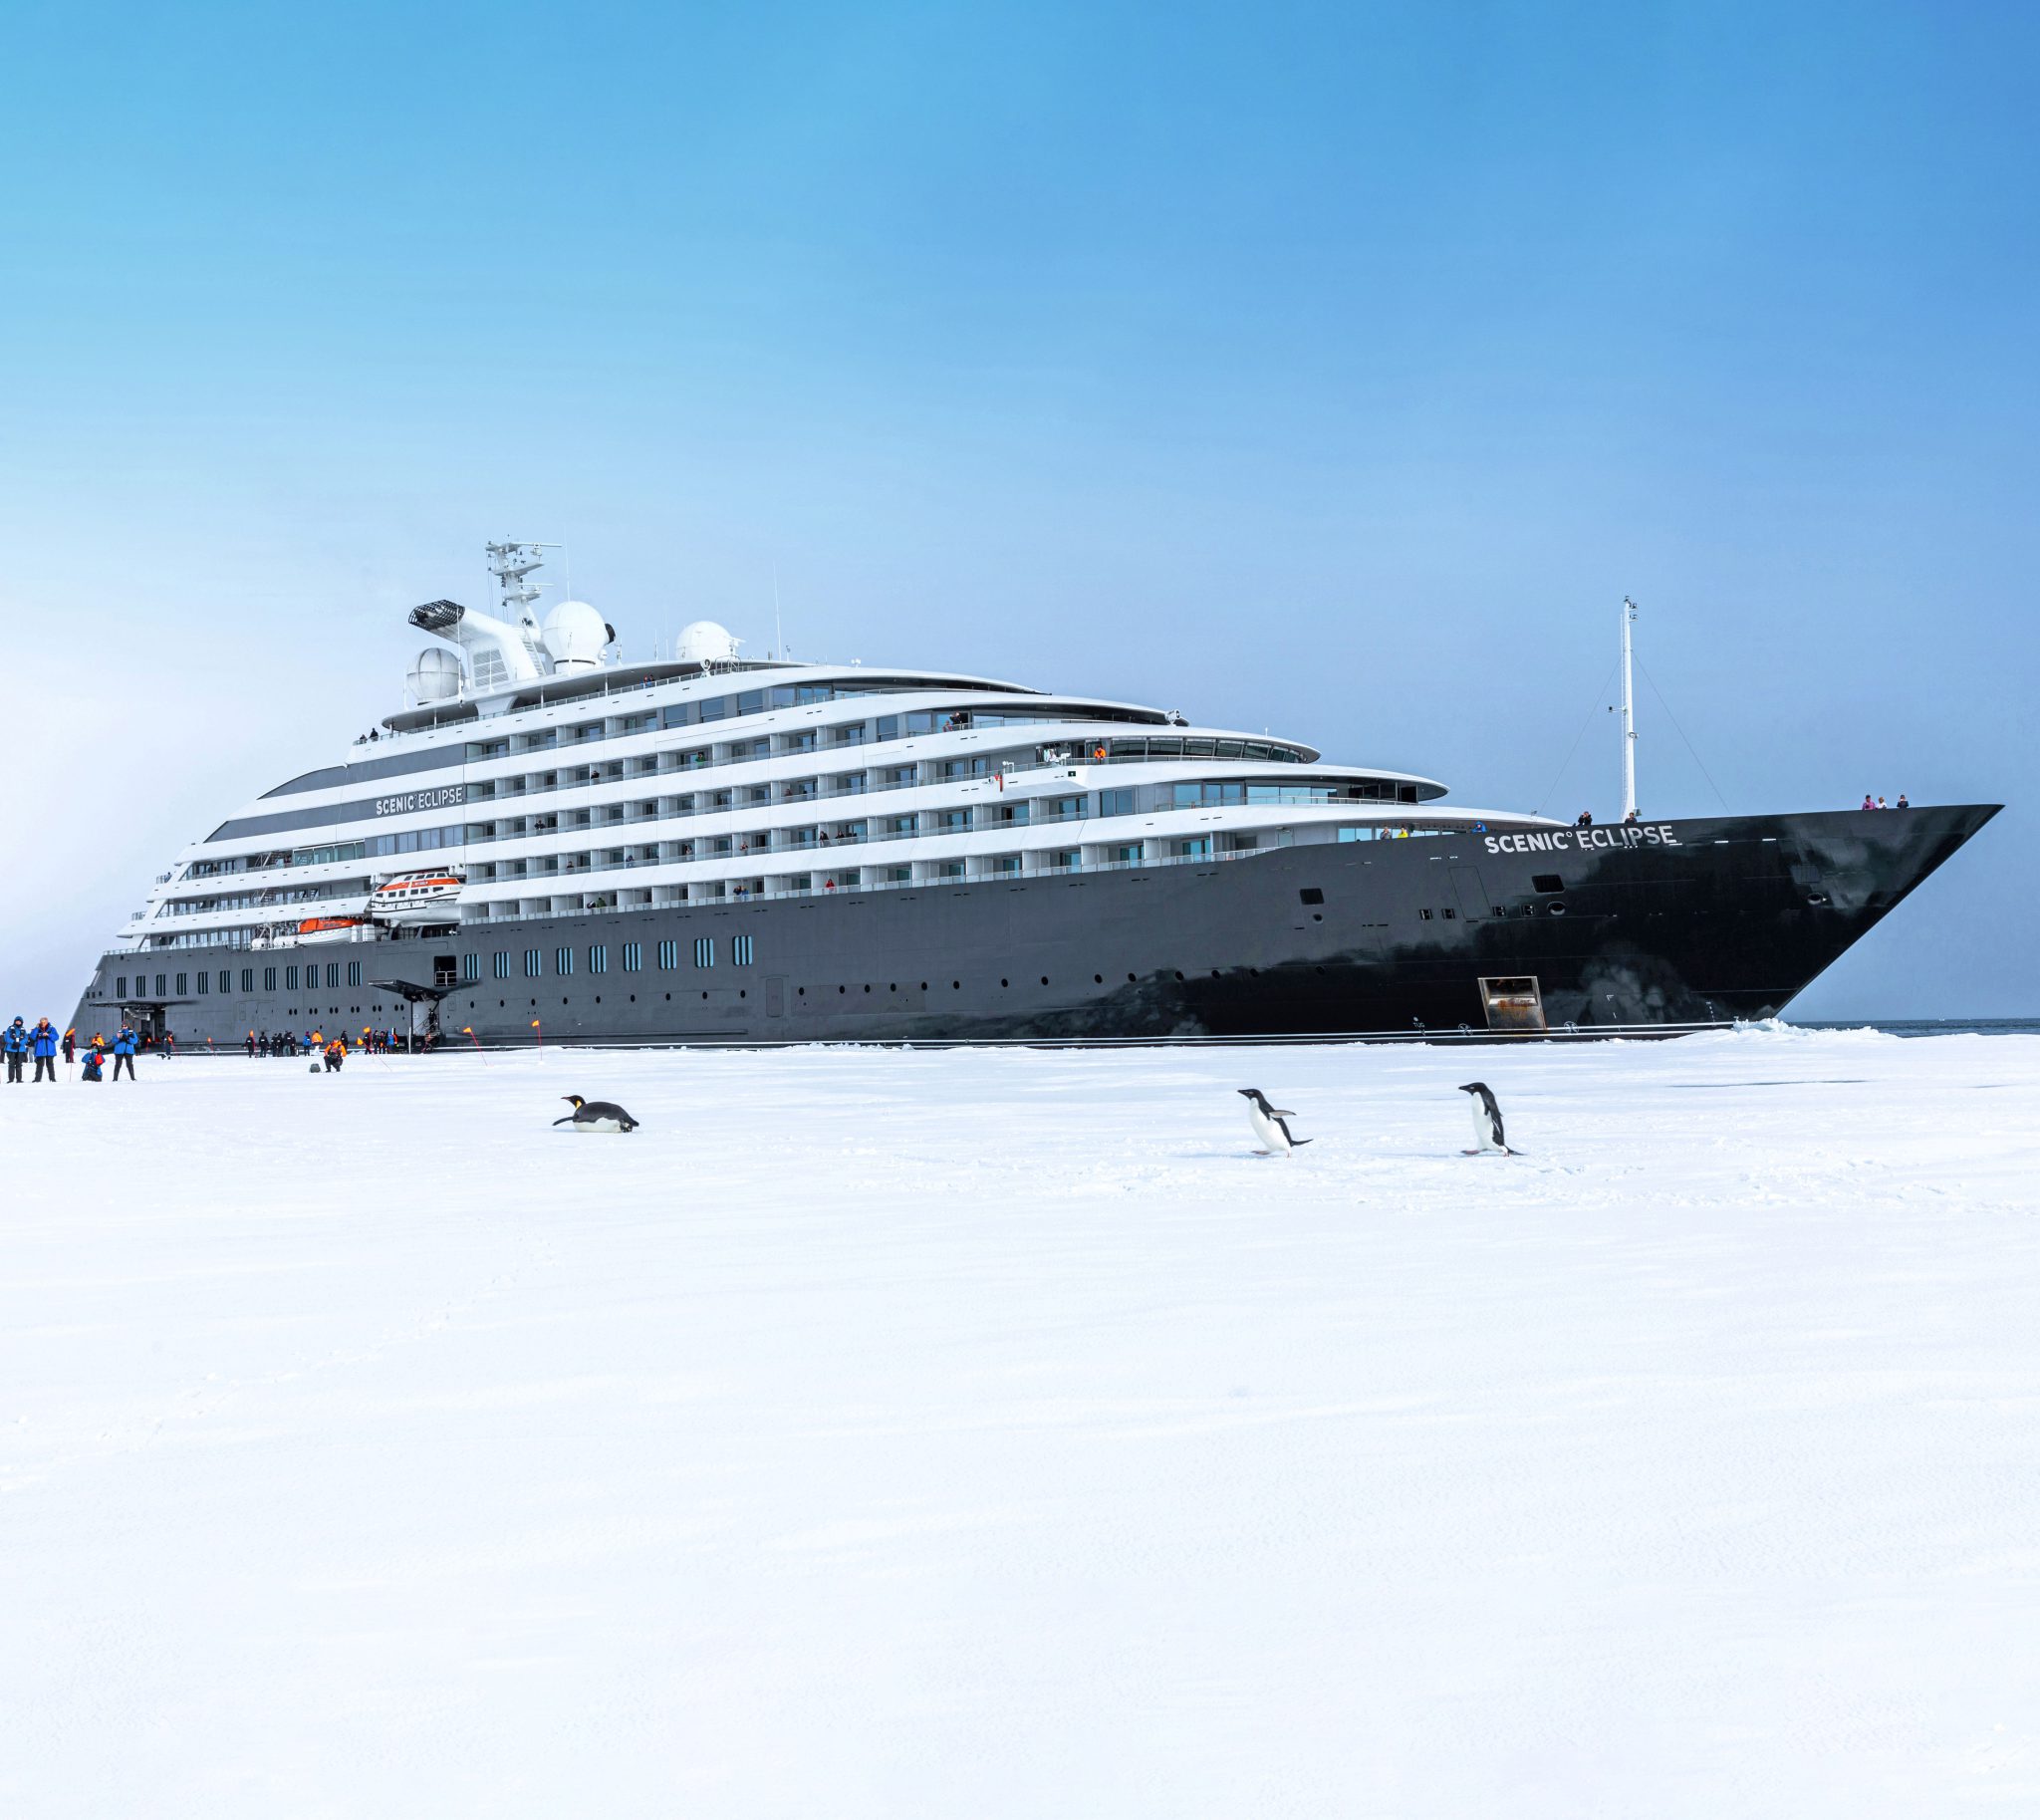 antarctica luxury tourism